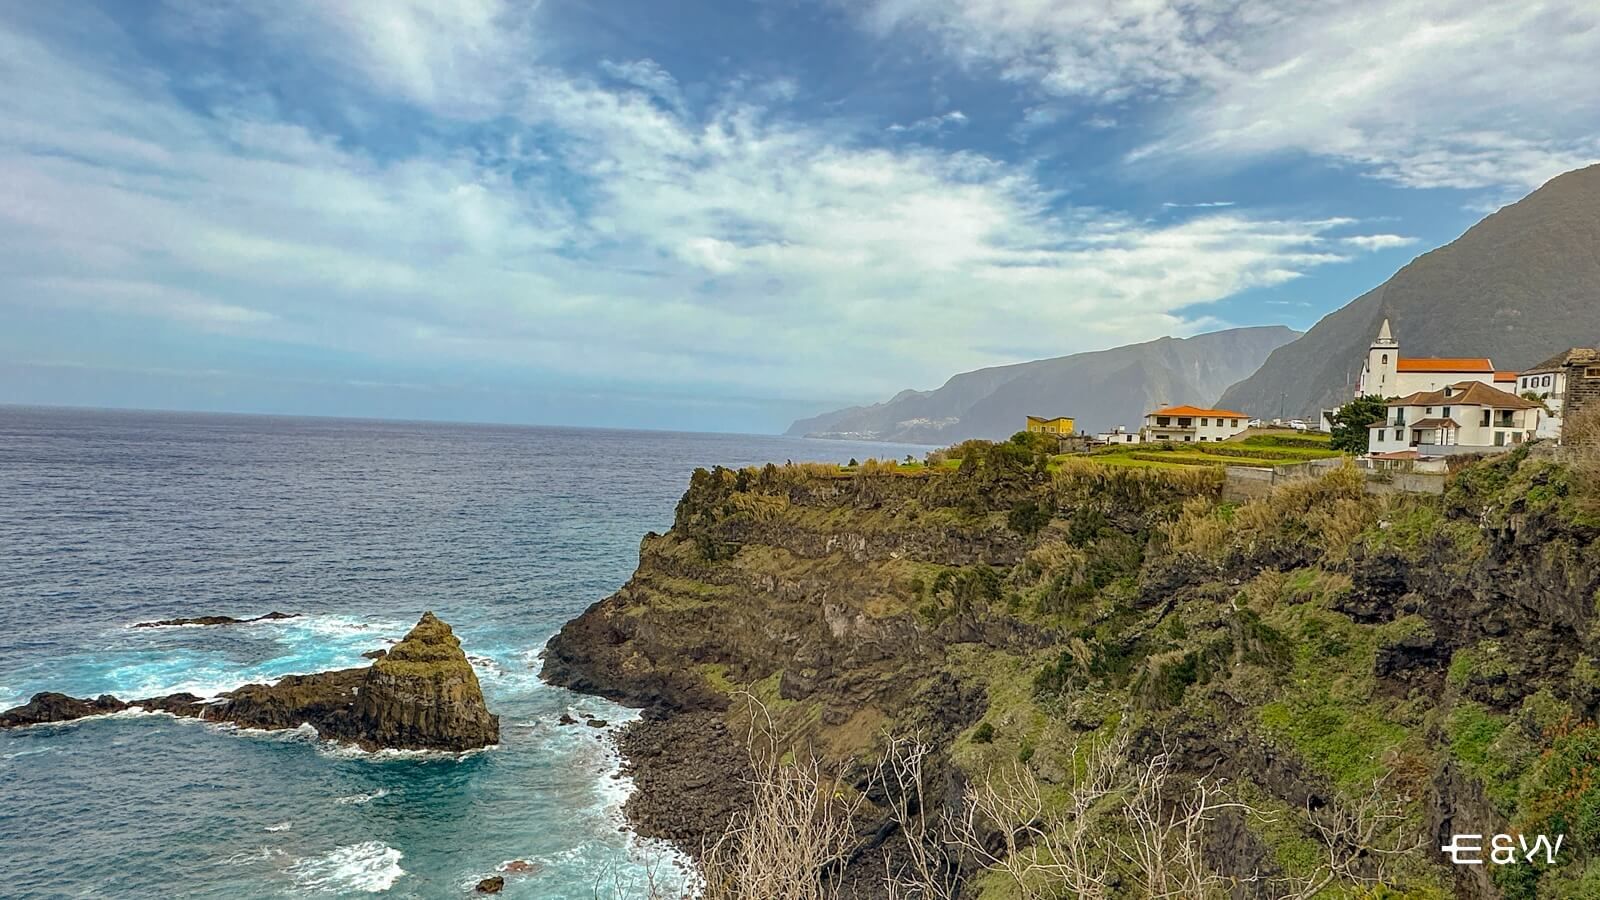 Striking view of the Madeiran coastline.